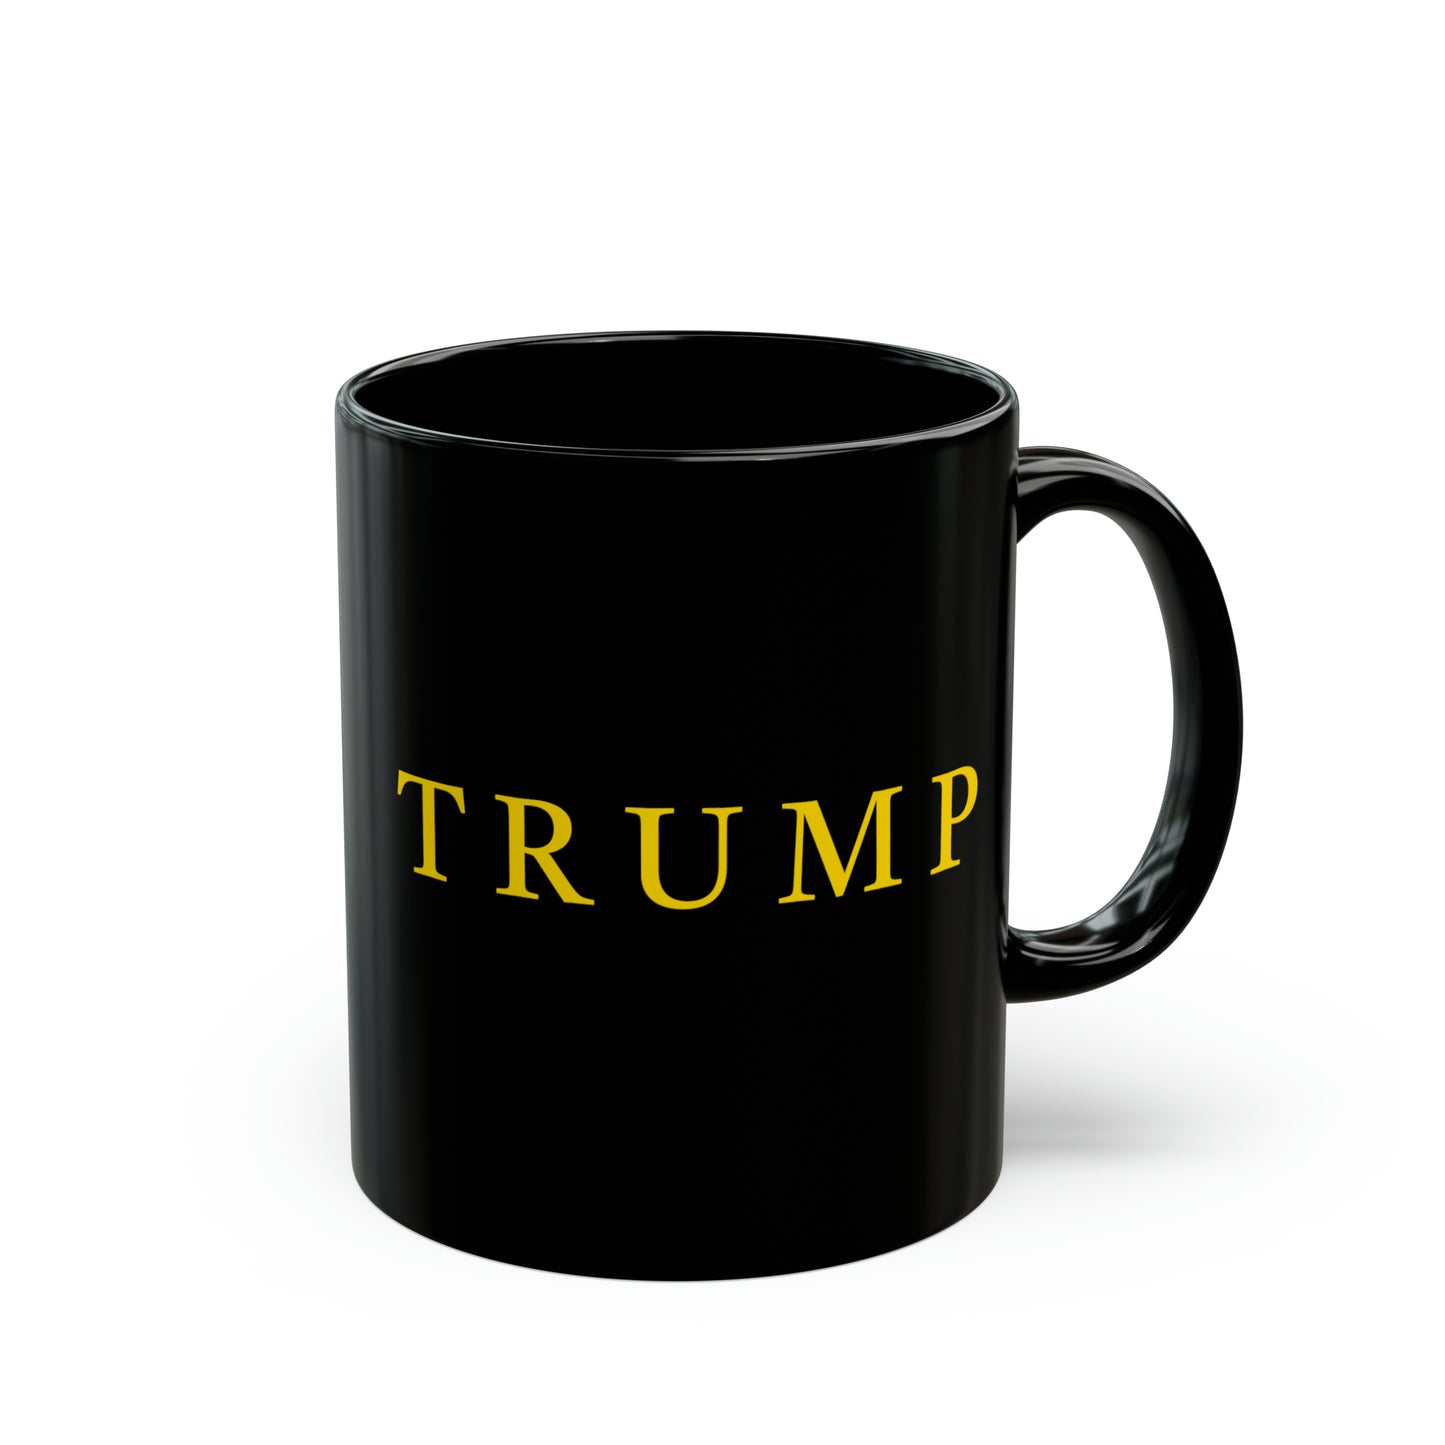 TRUMP Black coffee cup